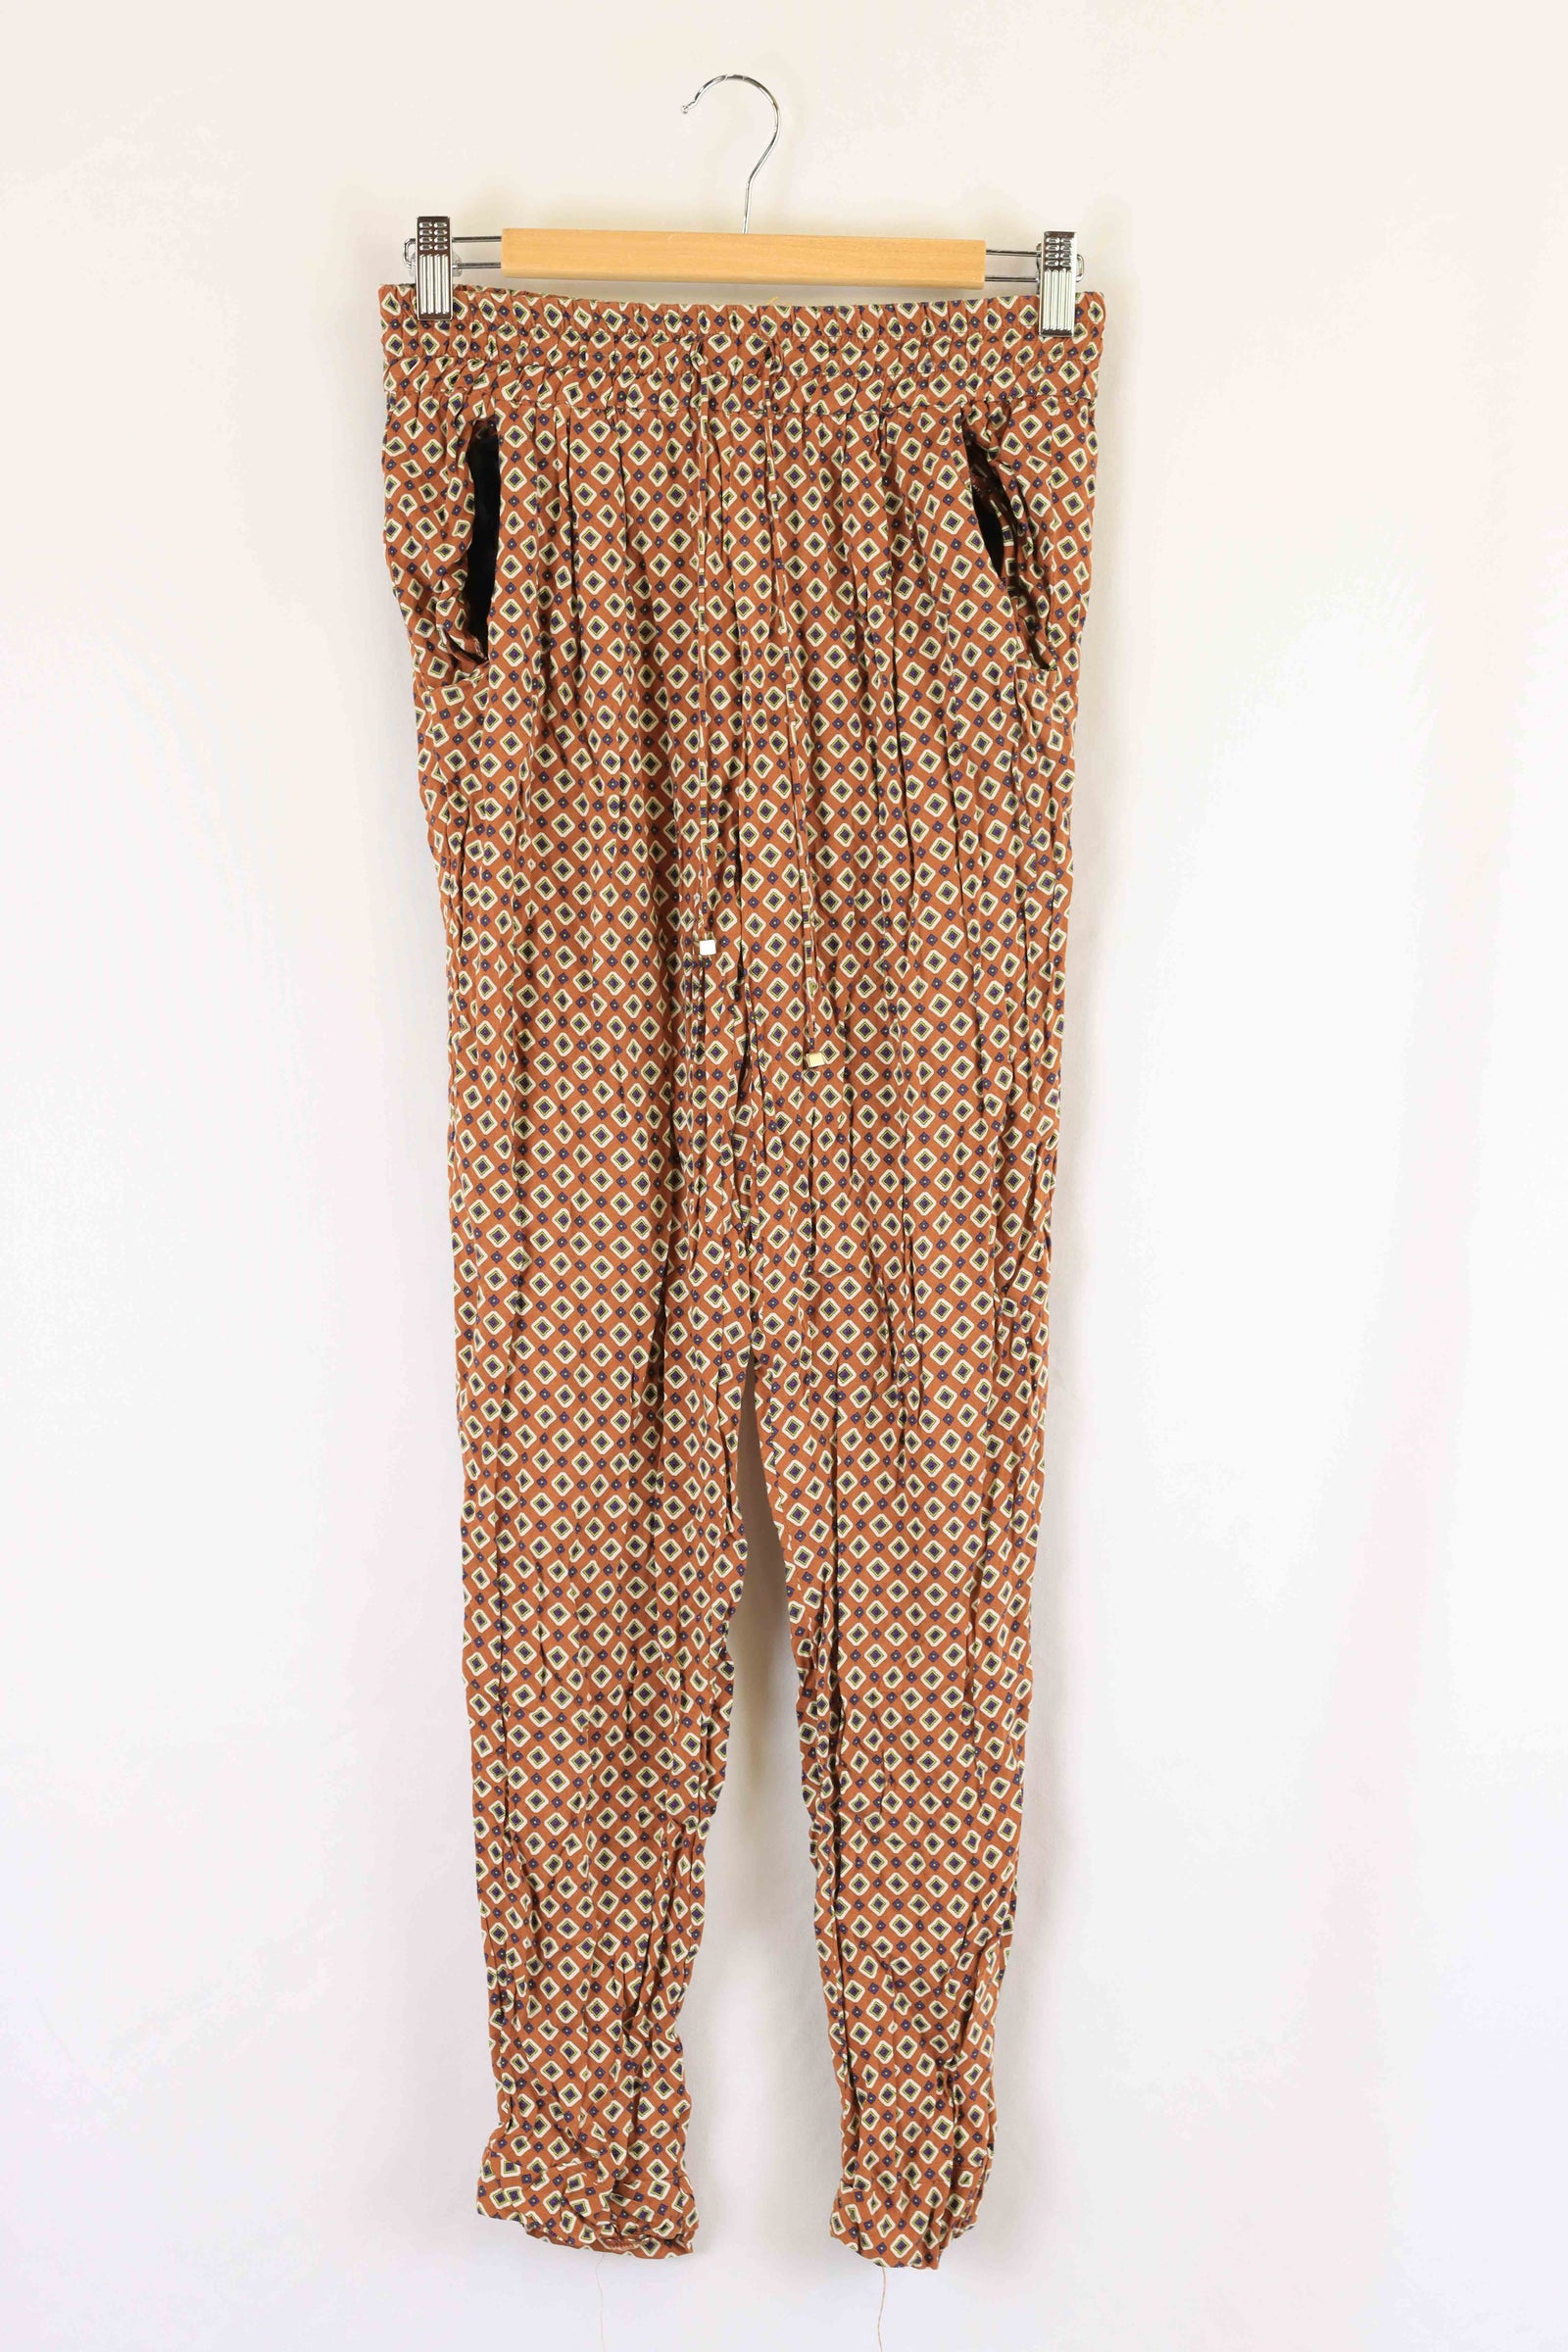 Husk Womens Leopard Print Pants Jogger Style Drawstring Size 8